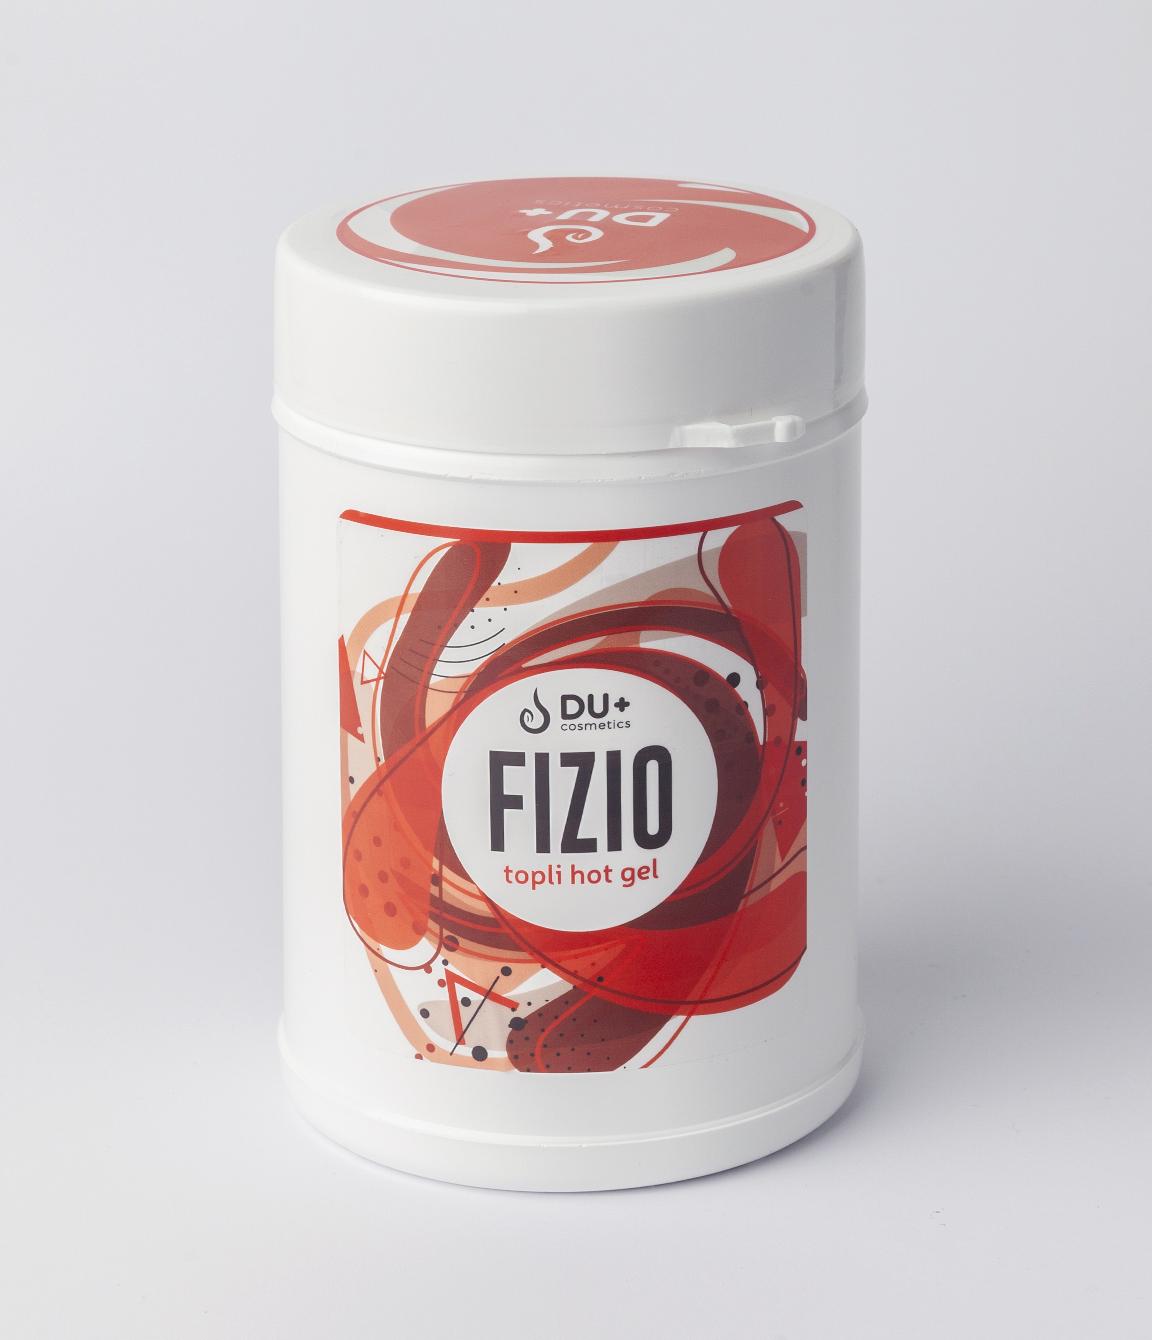 Du+ Cosmetics Fizio Topli HOT gel, 1kg